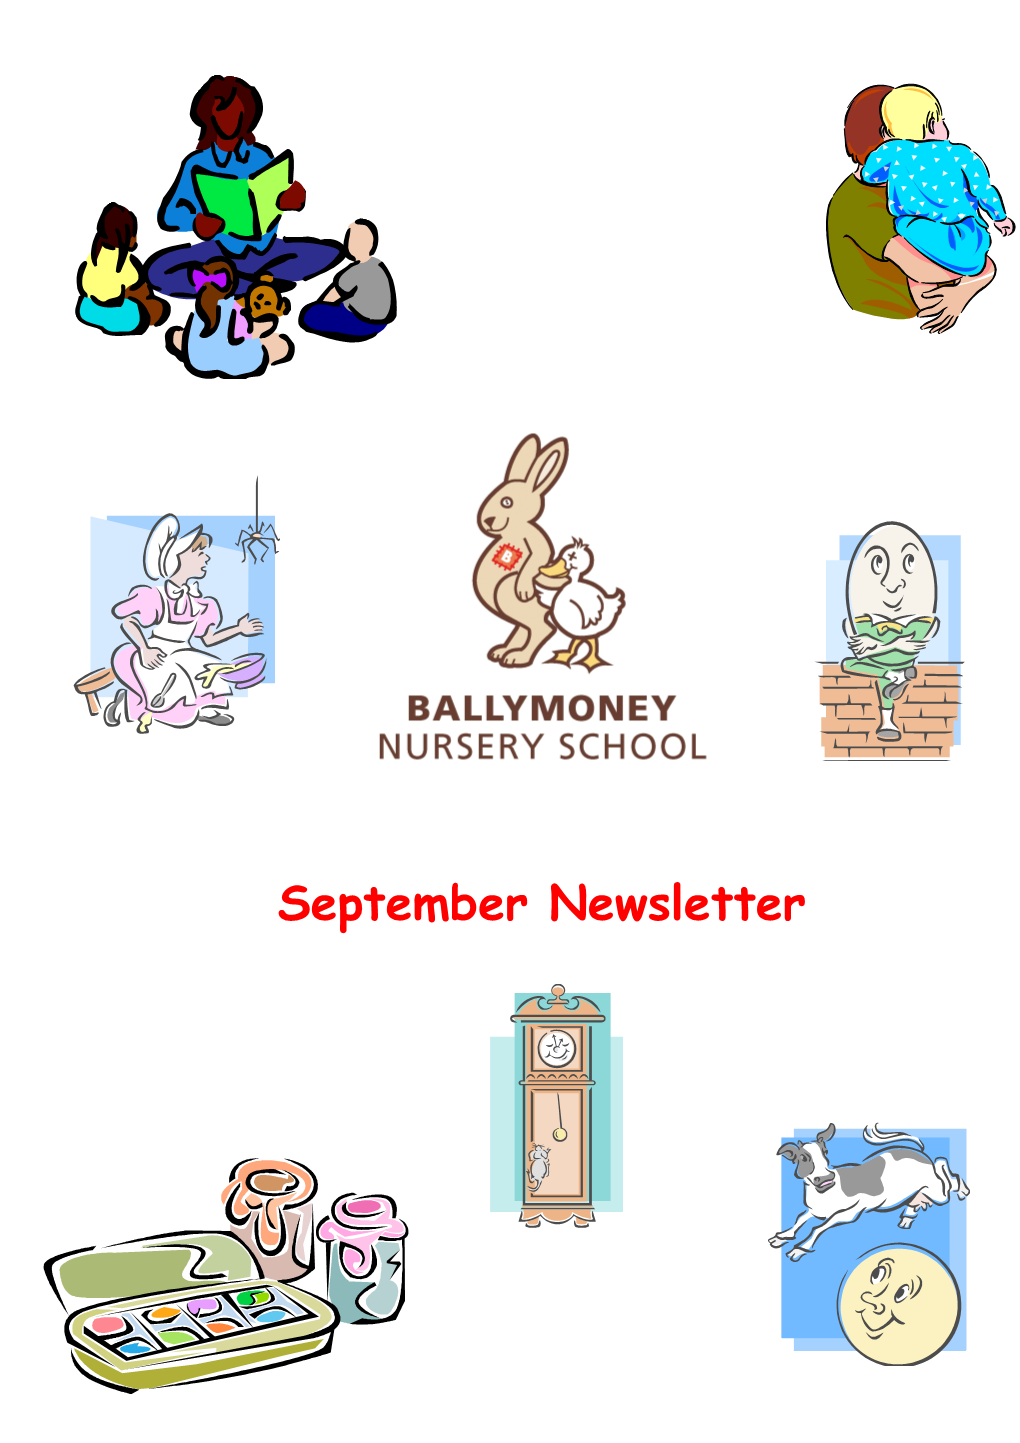 Ballymoney Nursery School